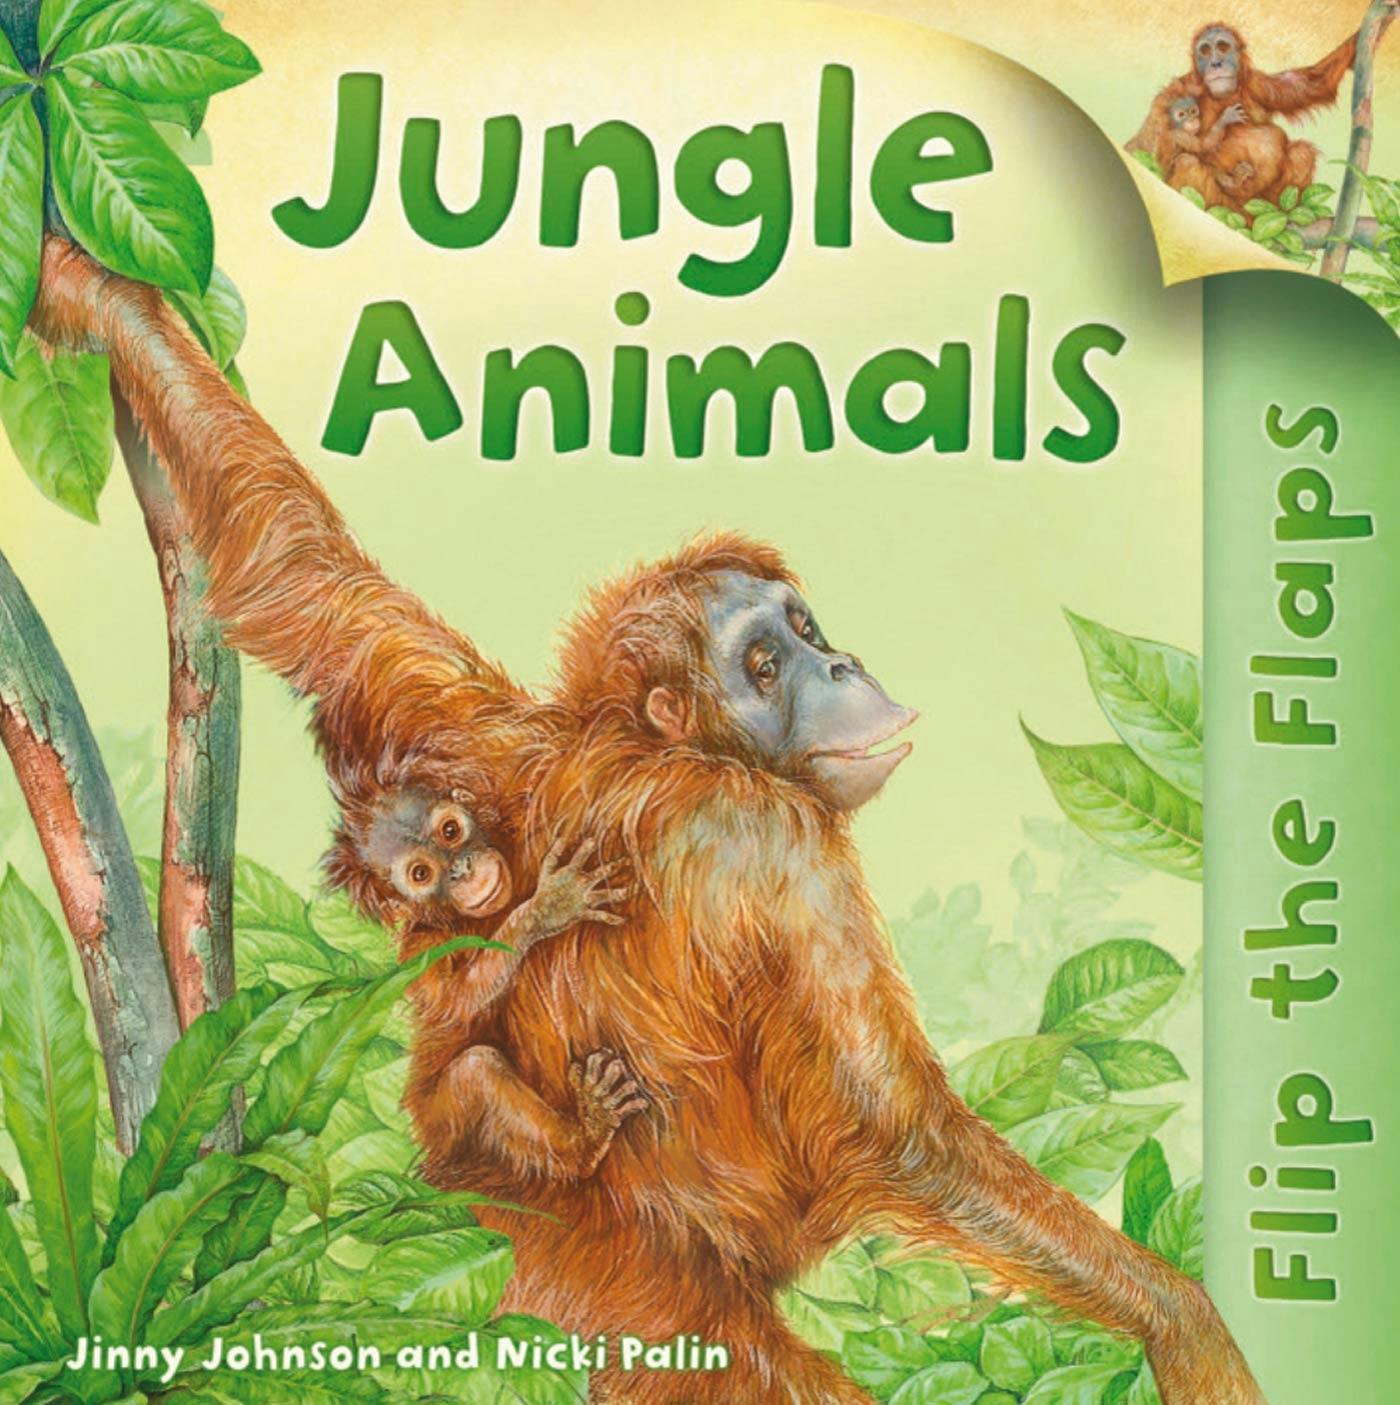 jungle animals reading books